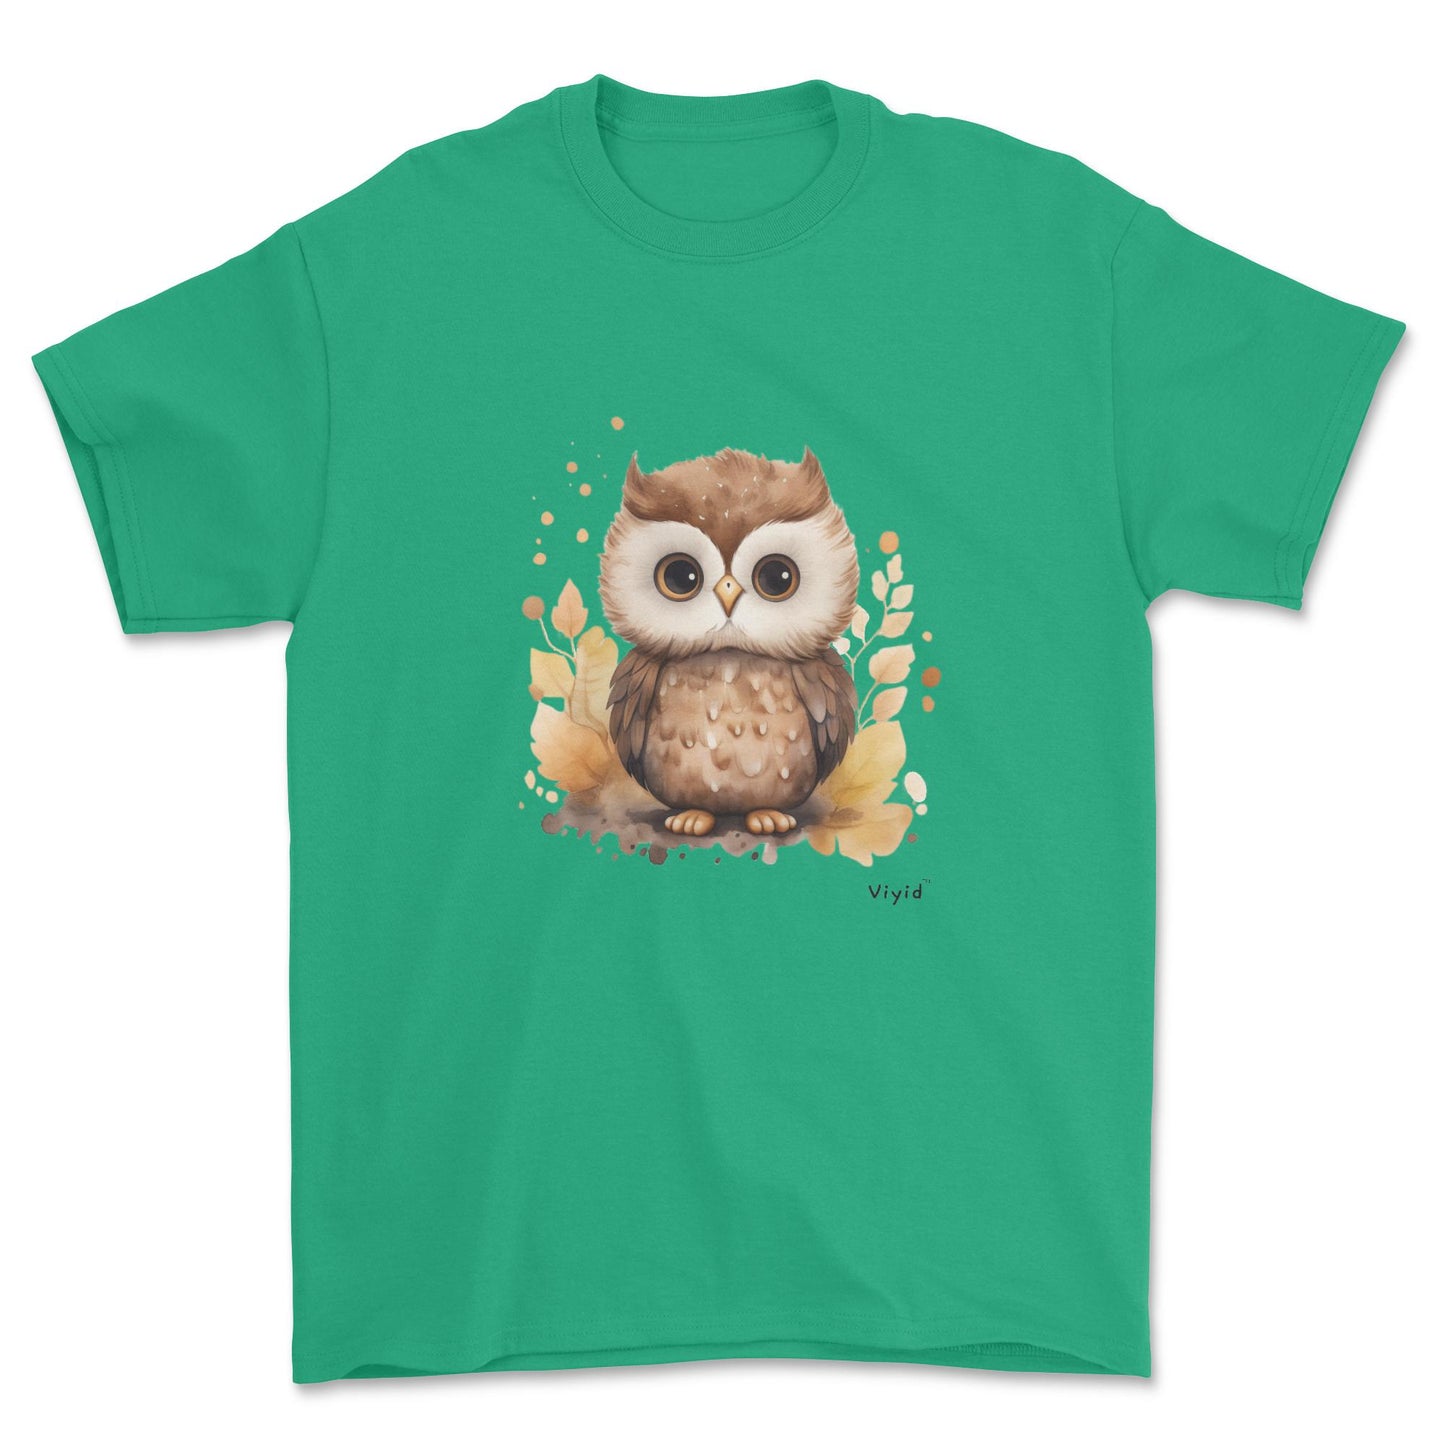 nocturnal owl adult t-shirt irish green